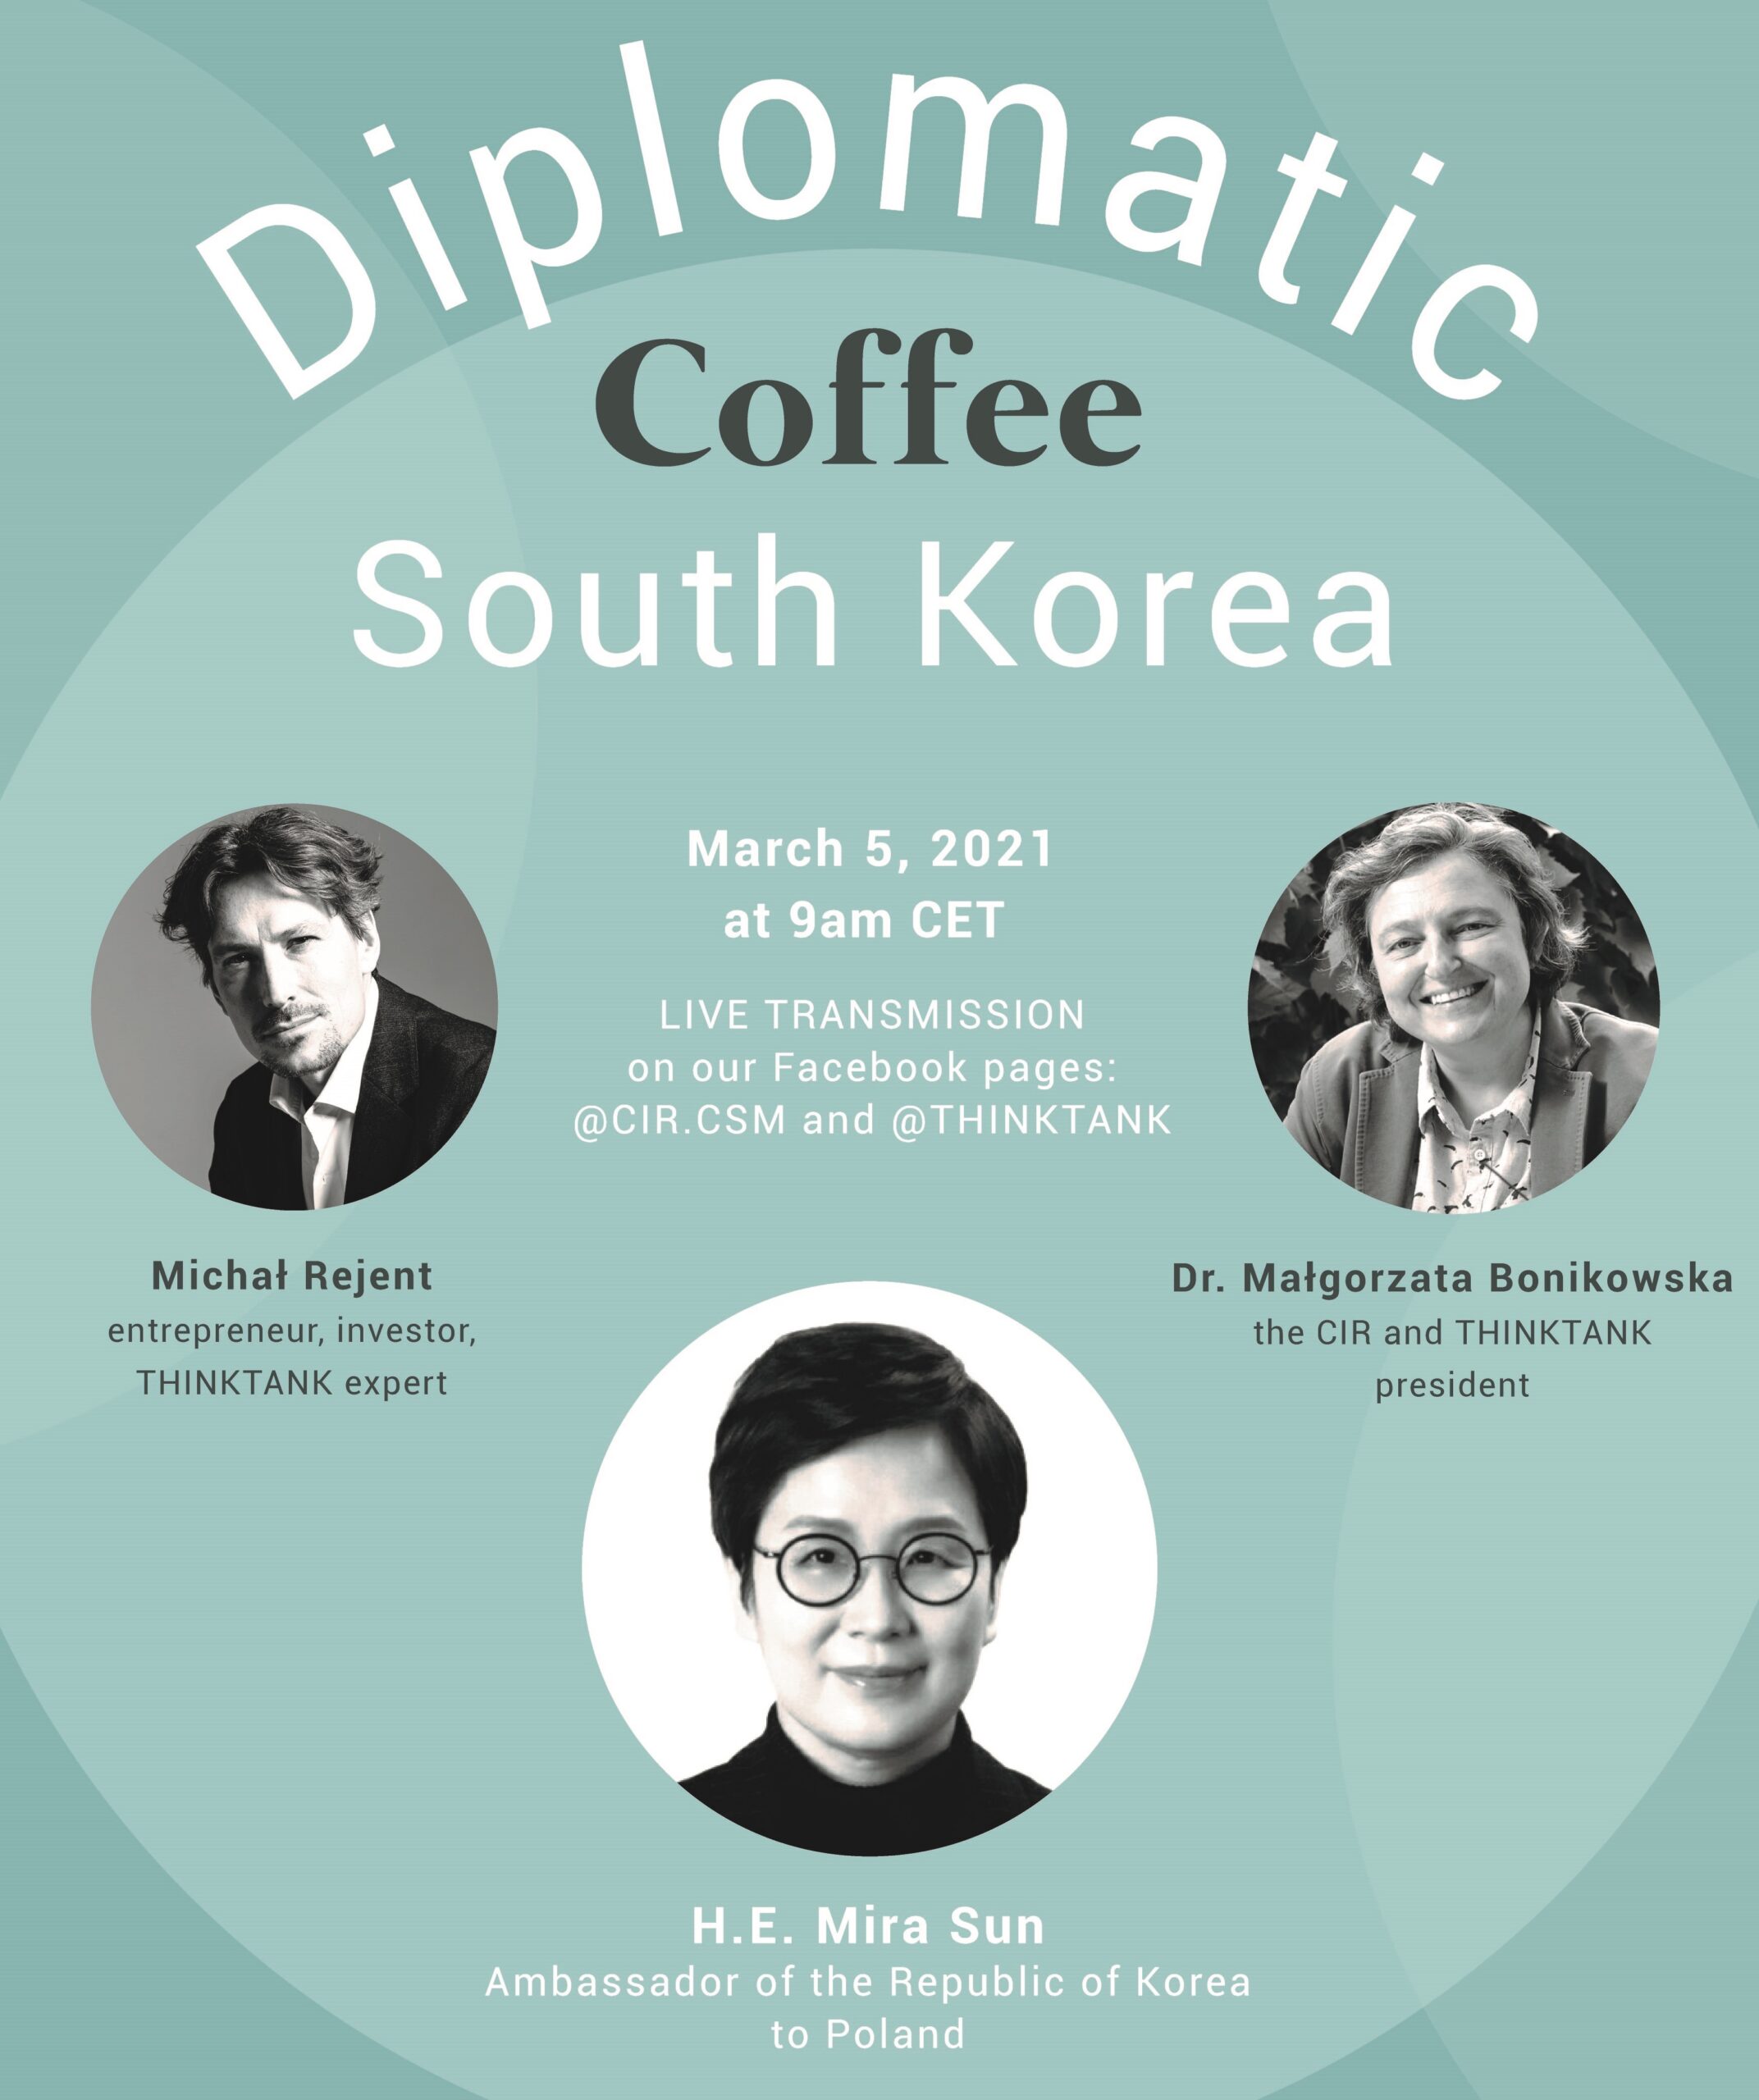 Diplomatic Coffee – South Korea